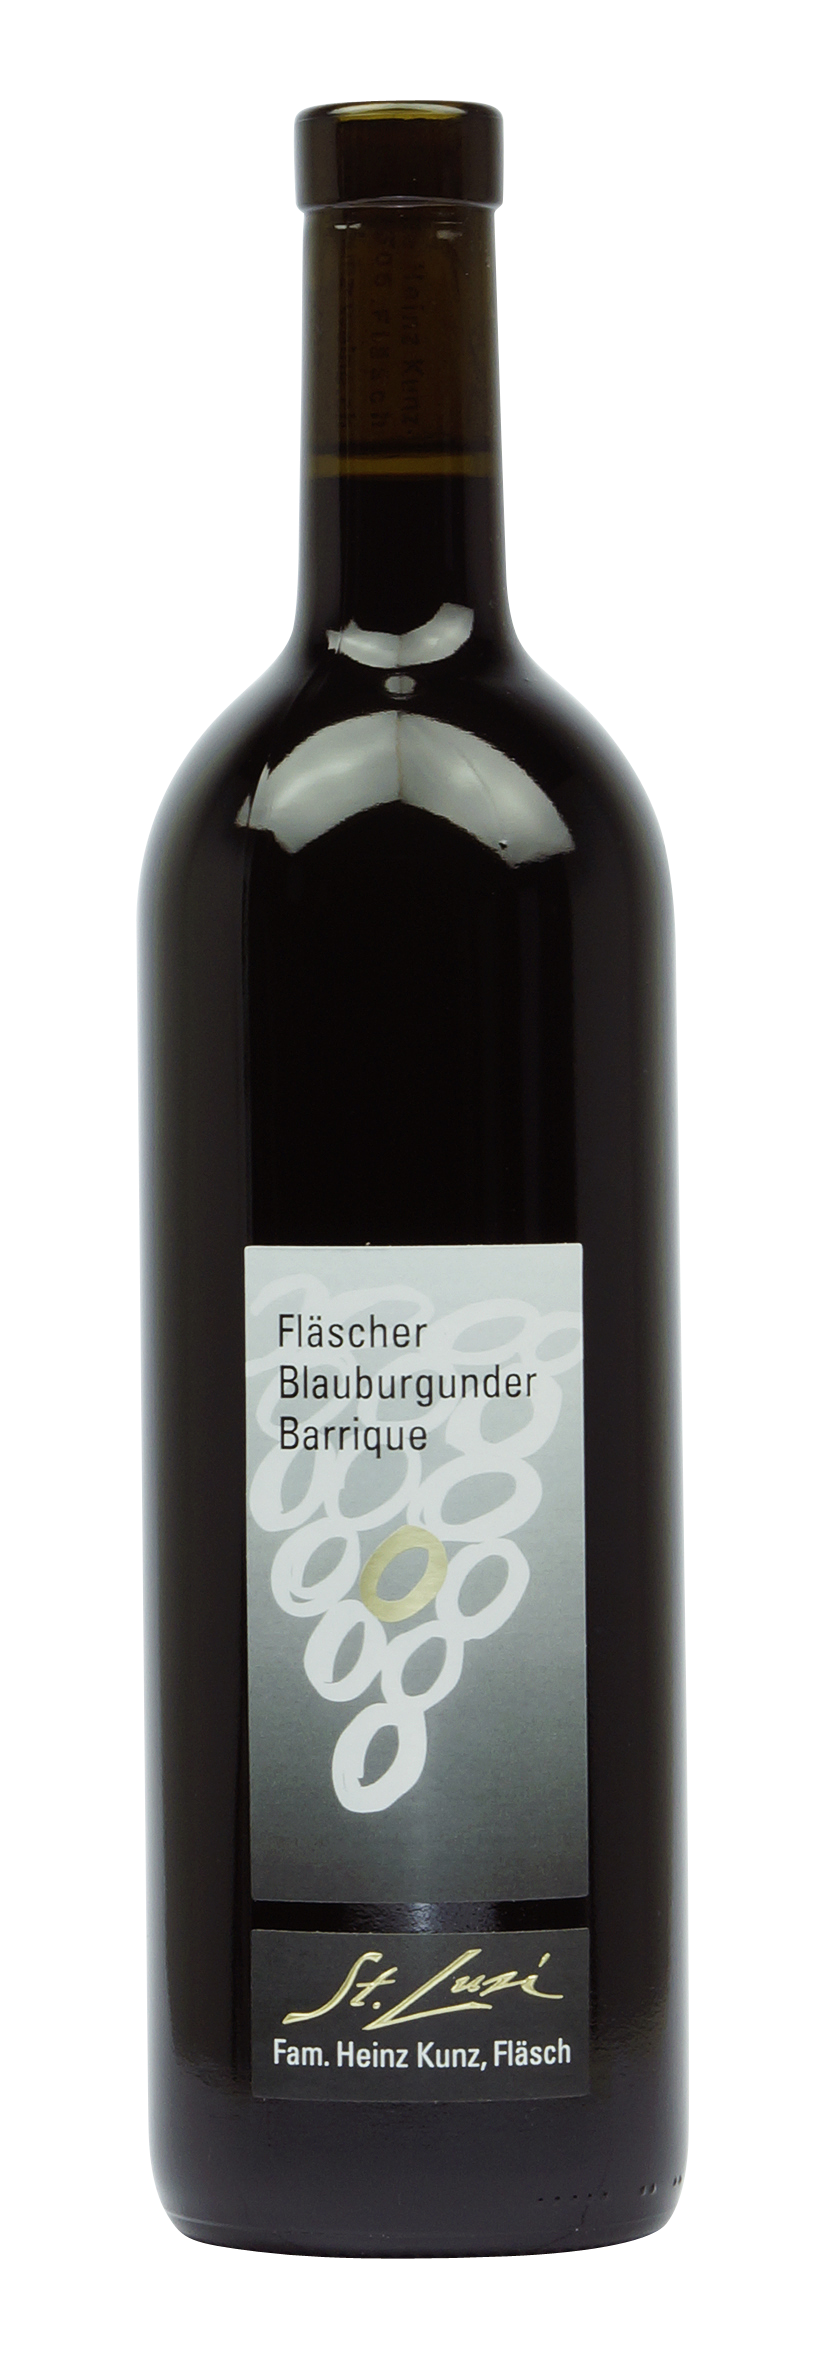 Graubünden AOC Fläscher Blauburgunder Barrique 2014